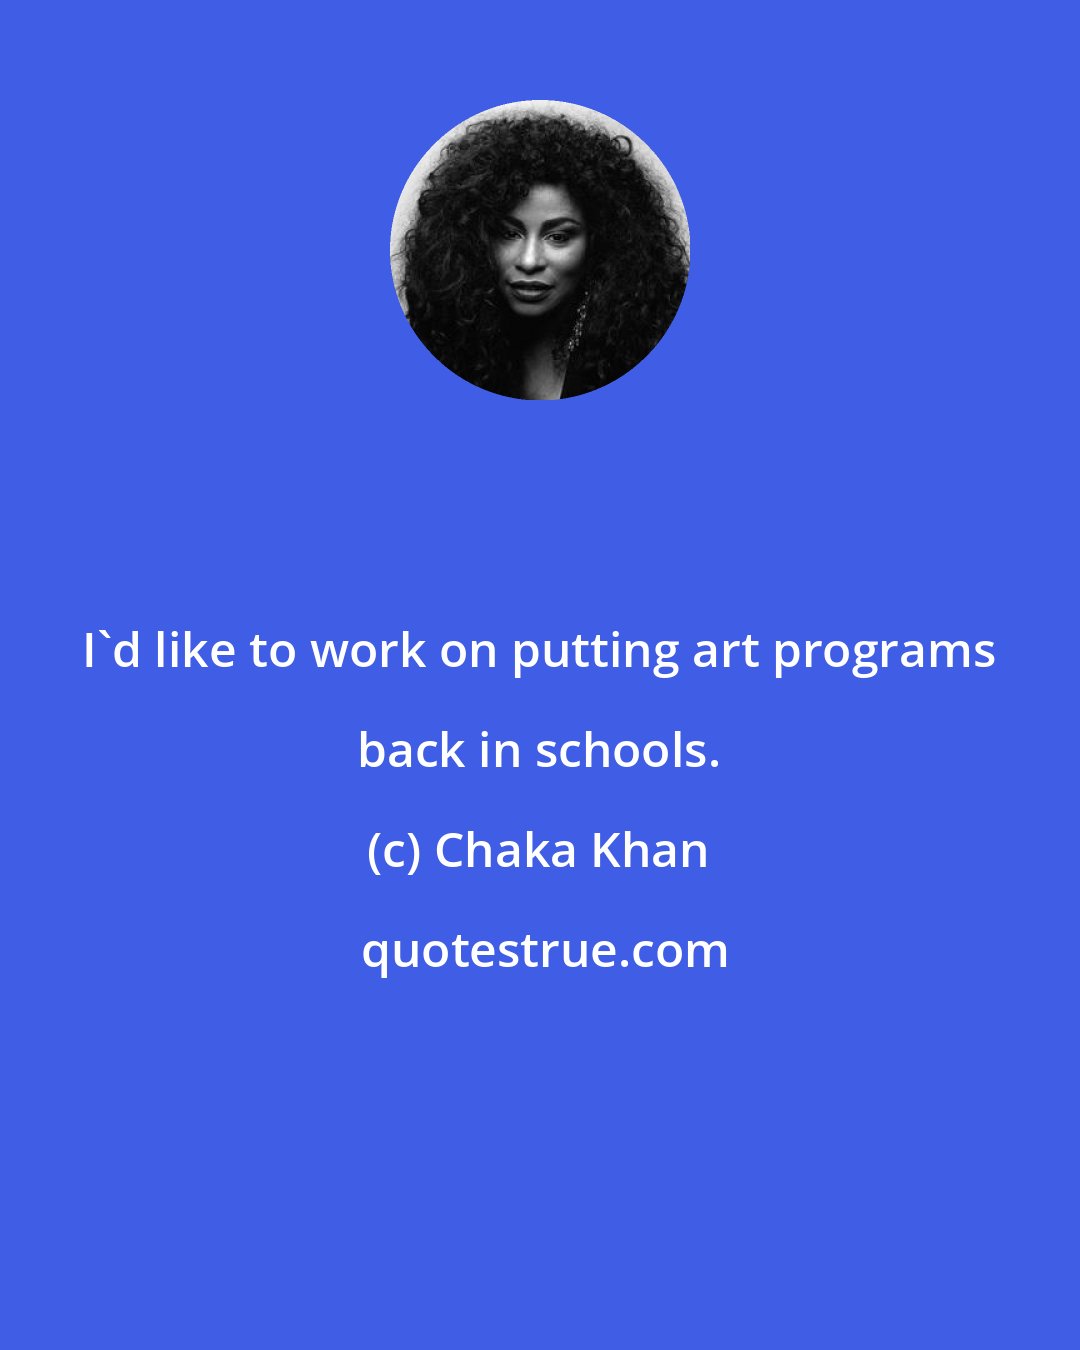 Chaka Khan: I'd like to work on putting art programs back in schools.